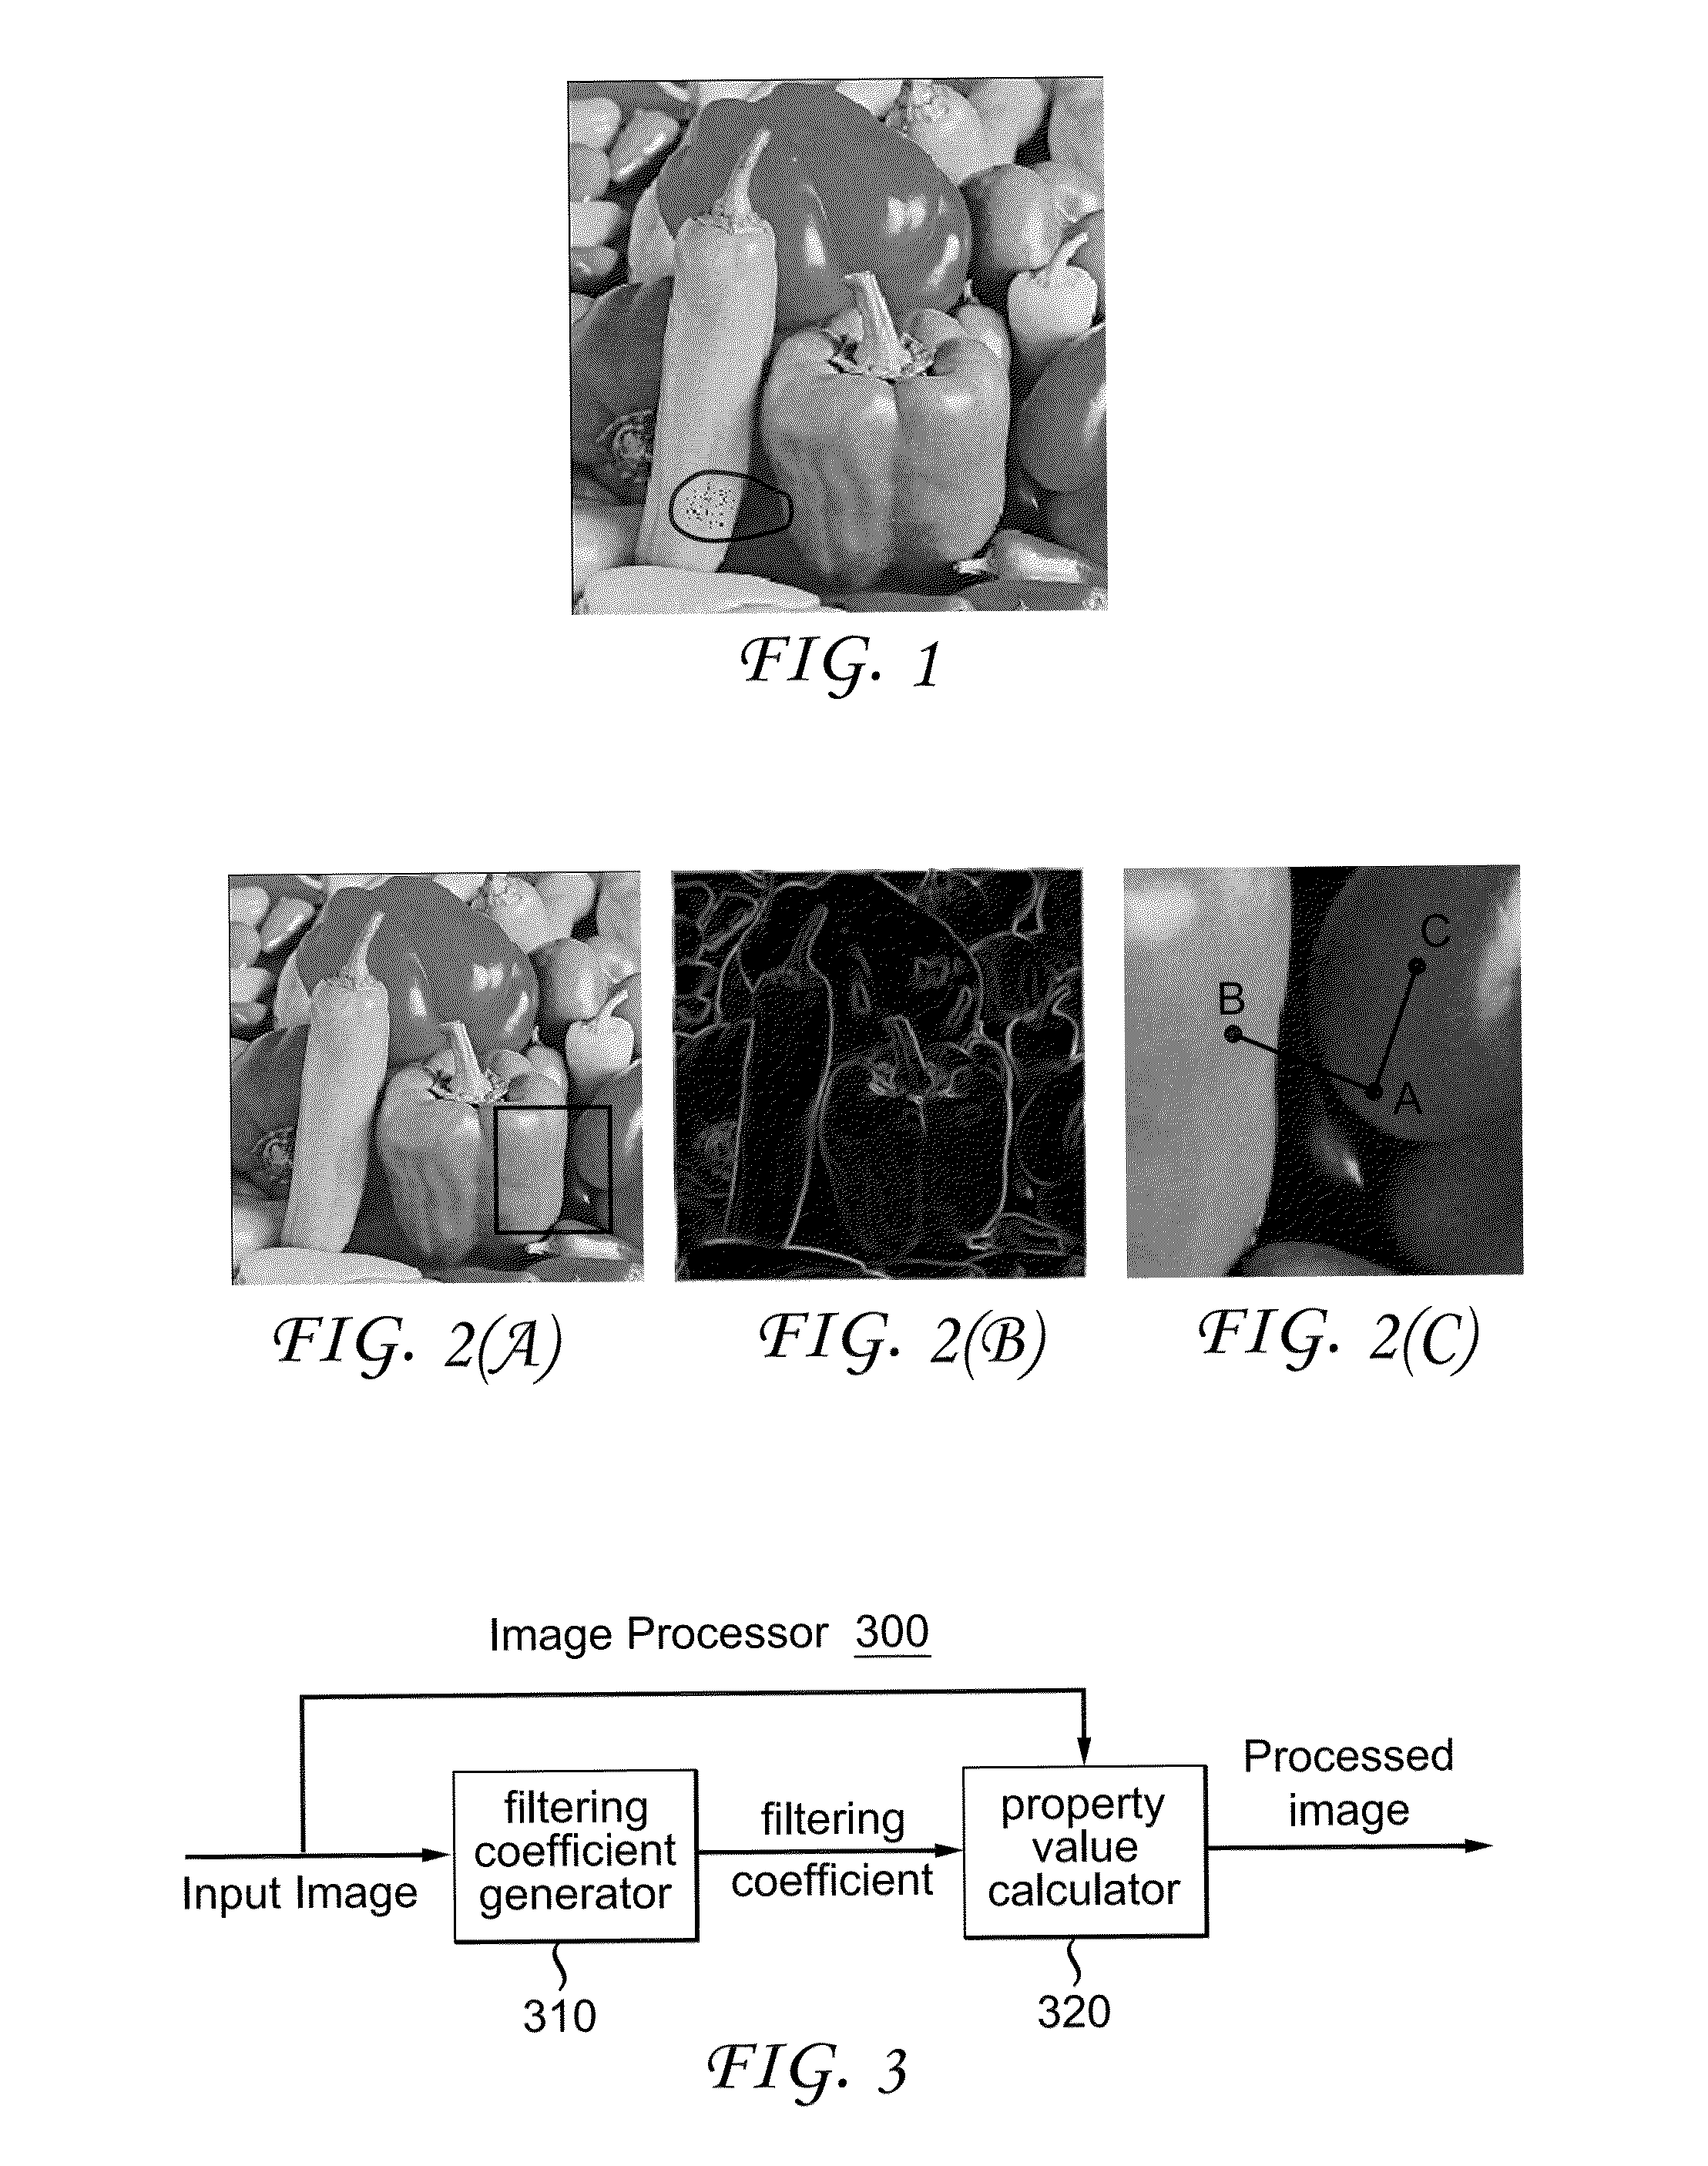 Image filtering based on structural information